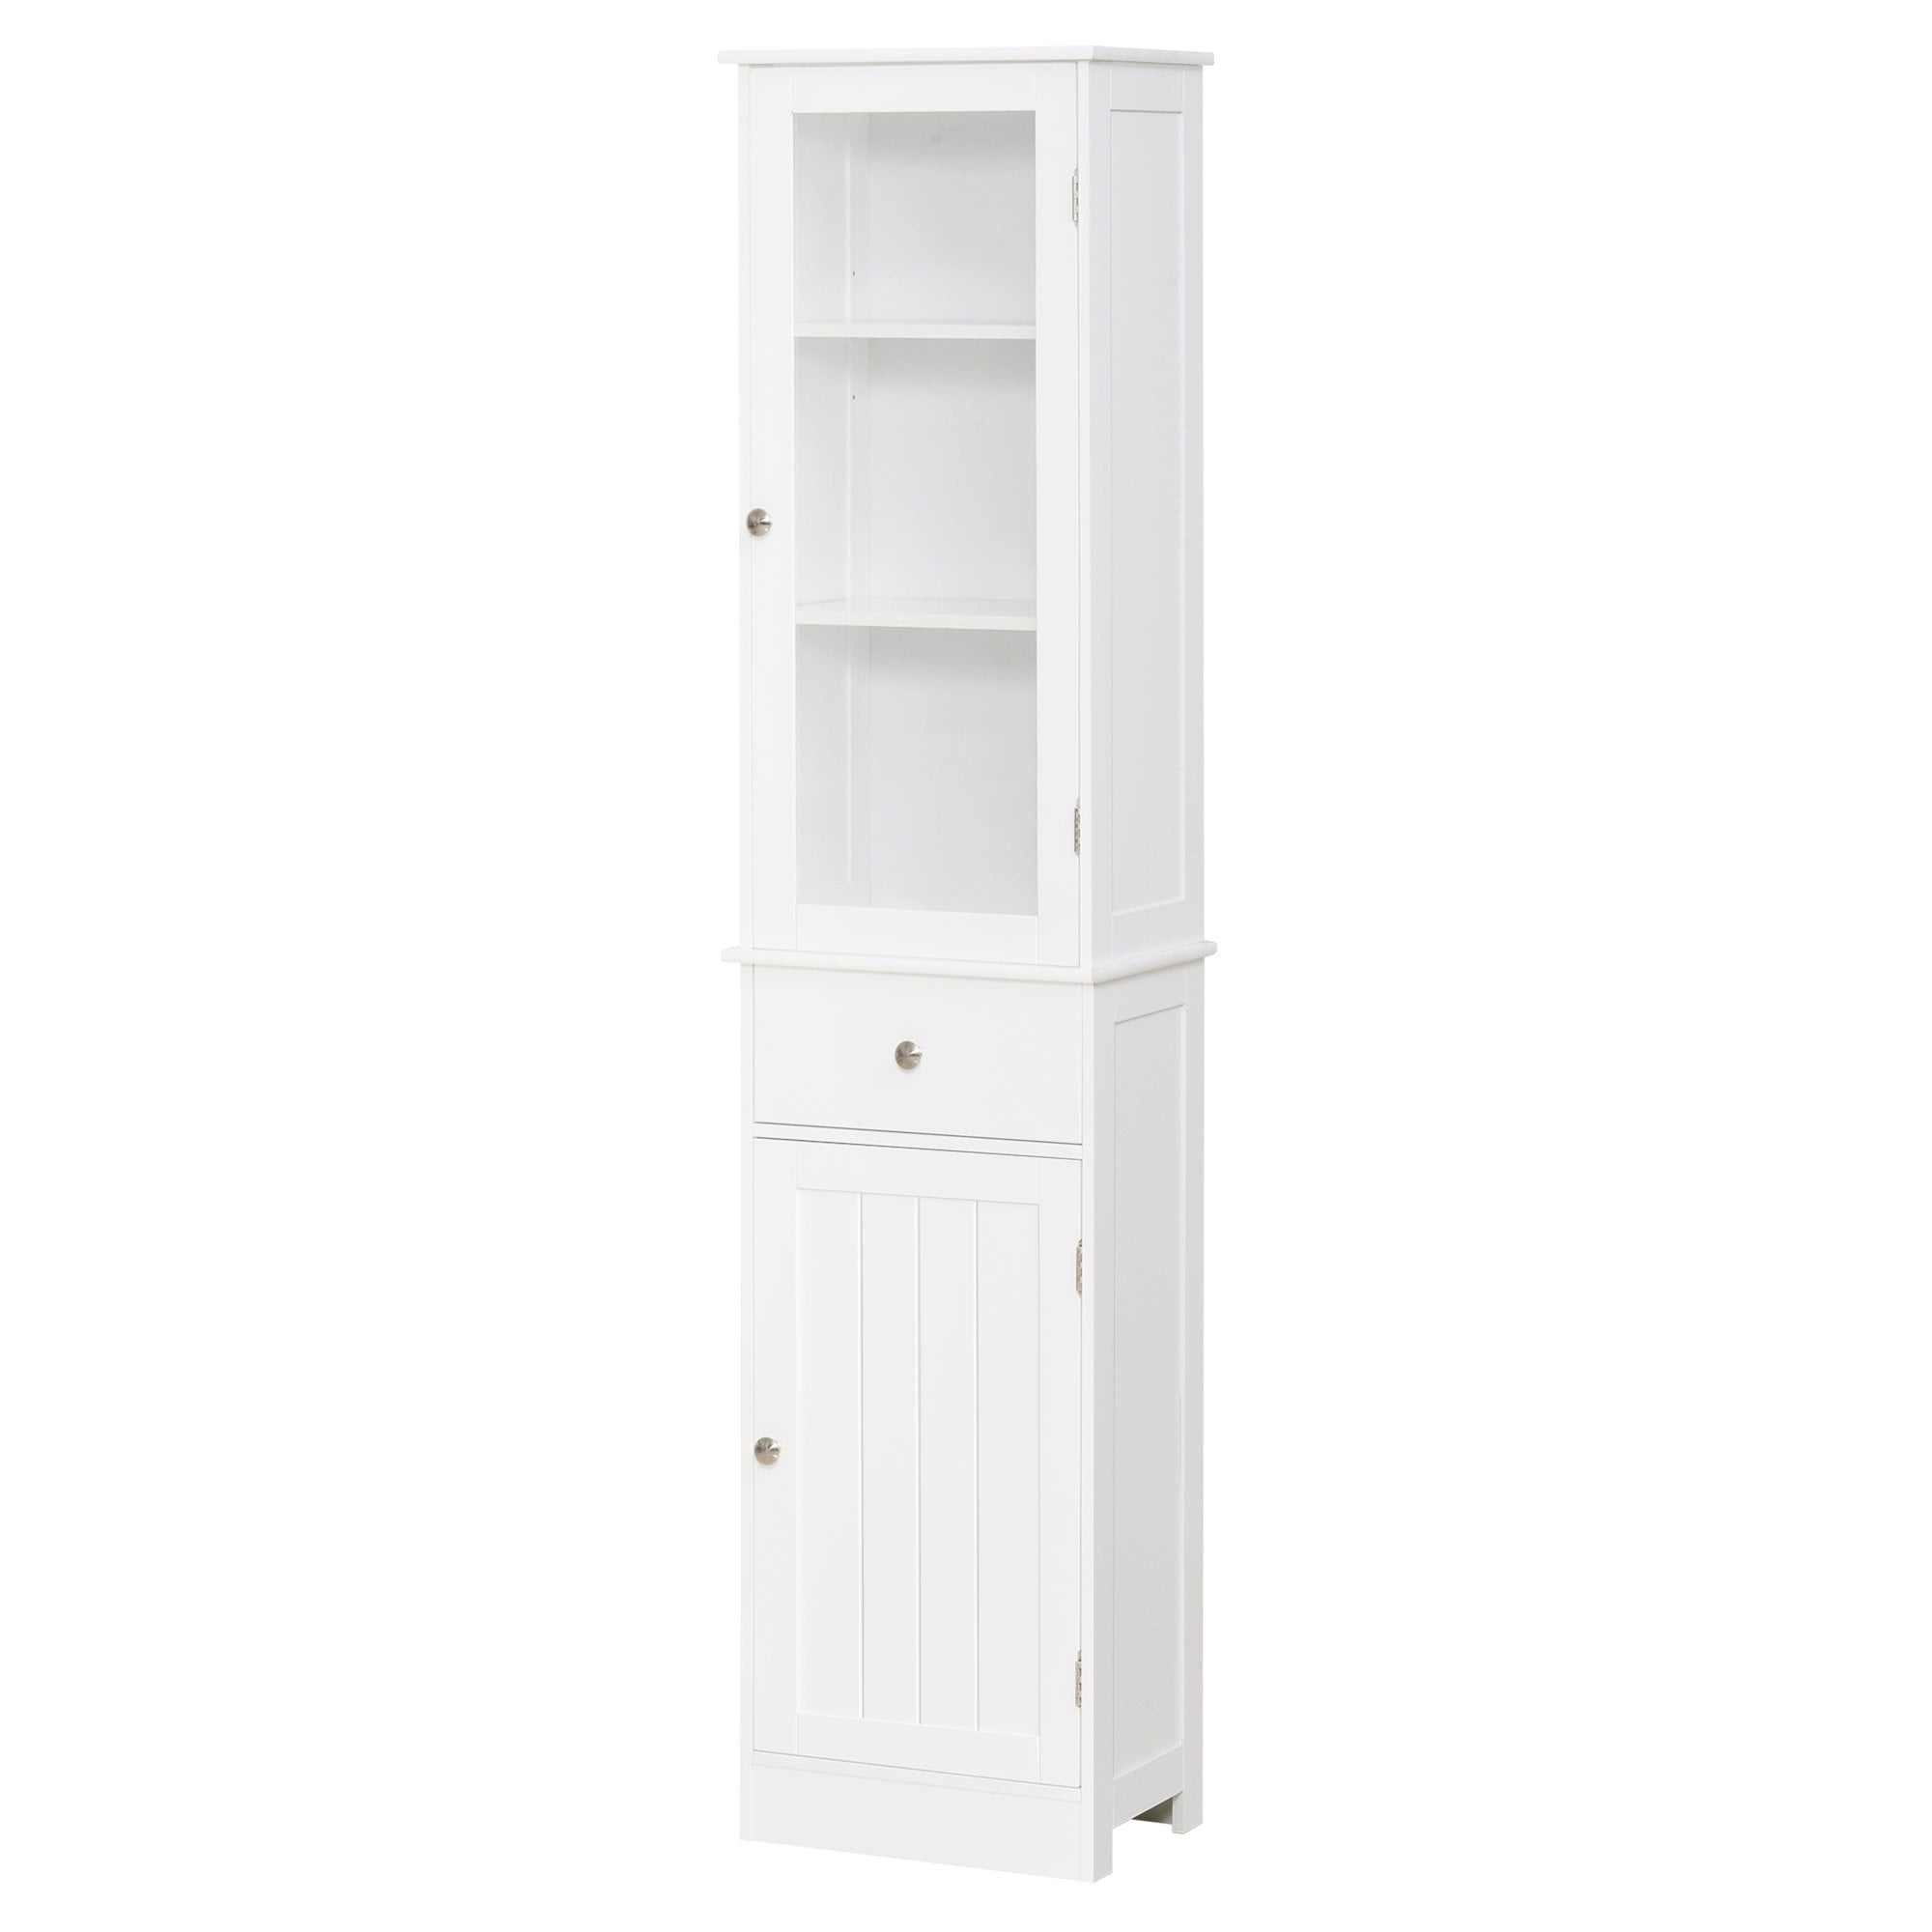 kleankin Bathroom Storage Cabinet with 3-tier Shelf Drawer Glass Door - Floor Cabinet Free Standing Tall Slim Side Organizer Shelves - White Multiple